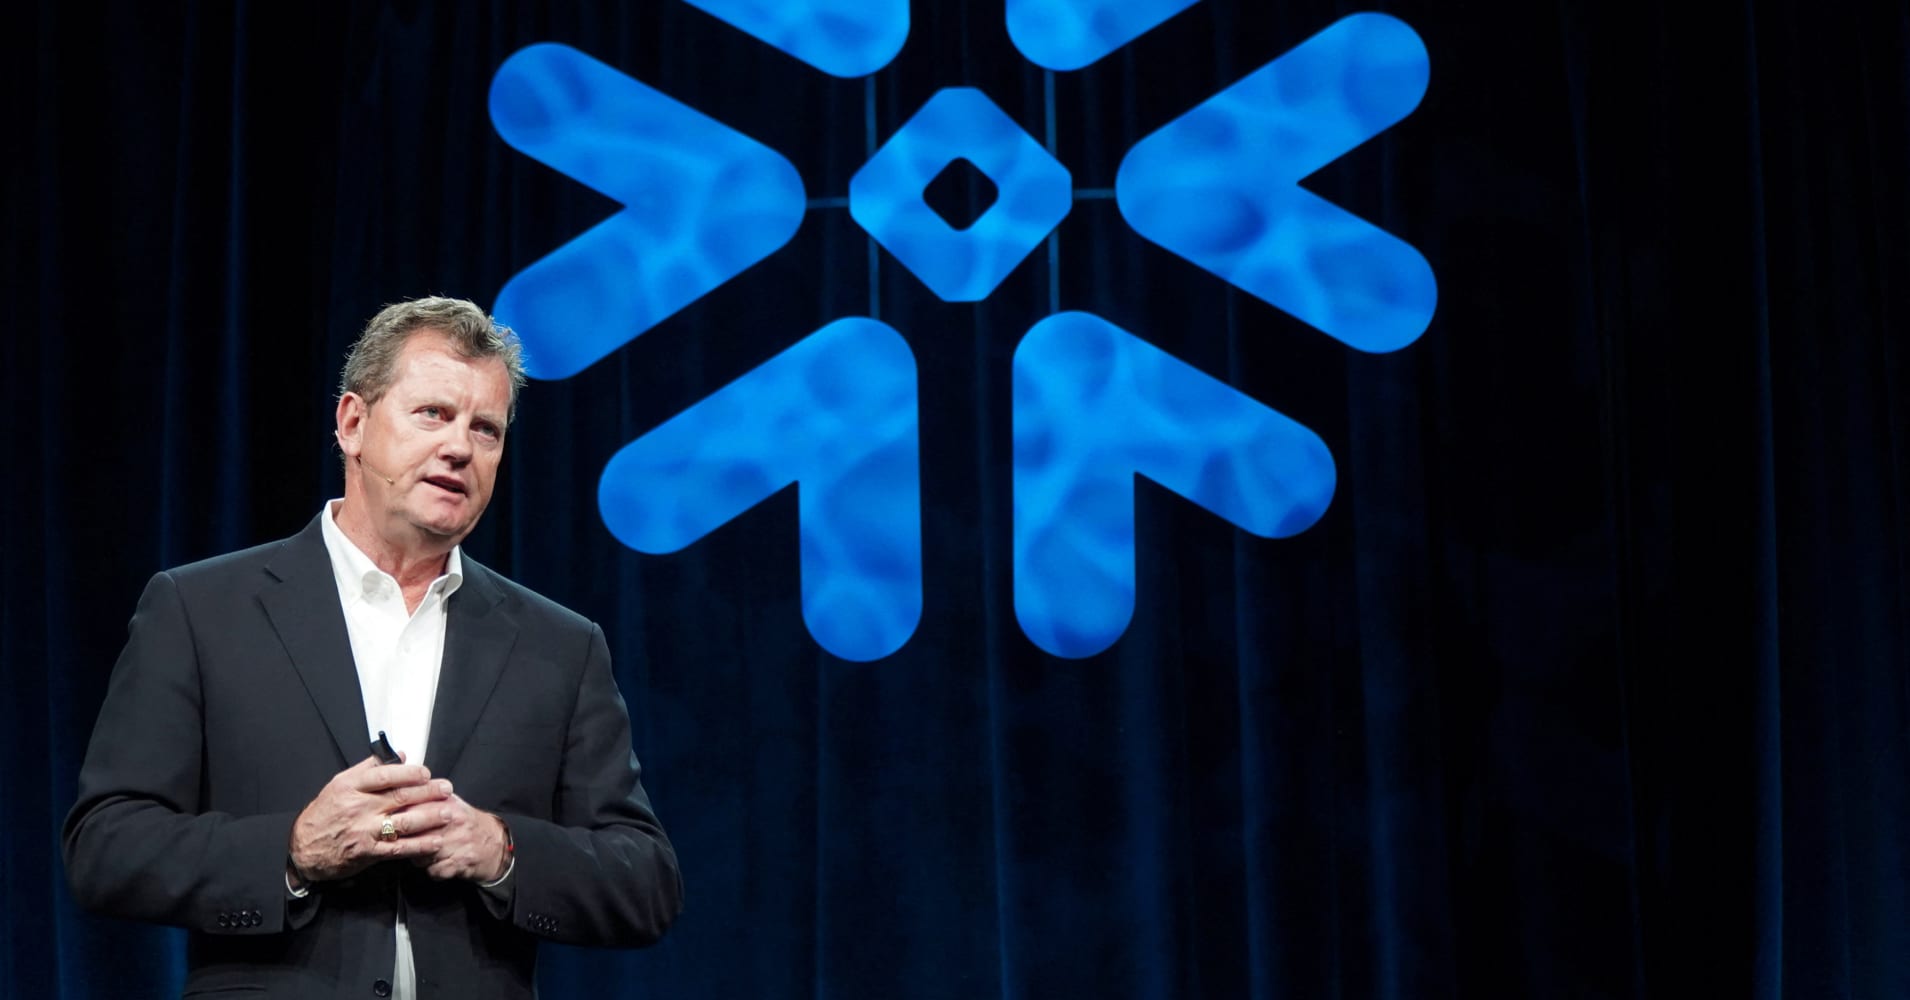 microsoft, snowflake shares drop 18% on ceo's retirement, weak guidance